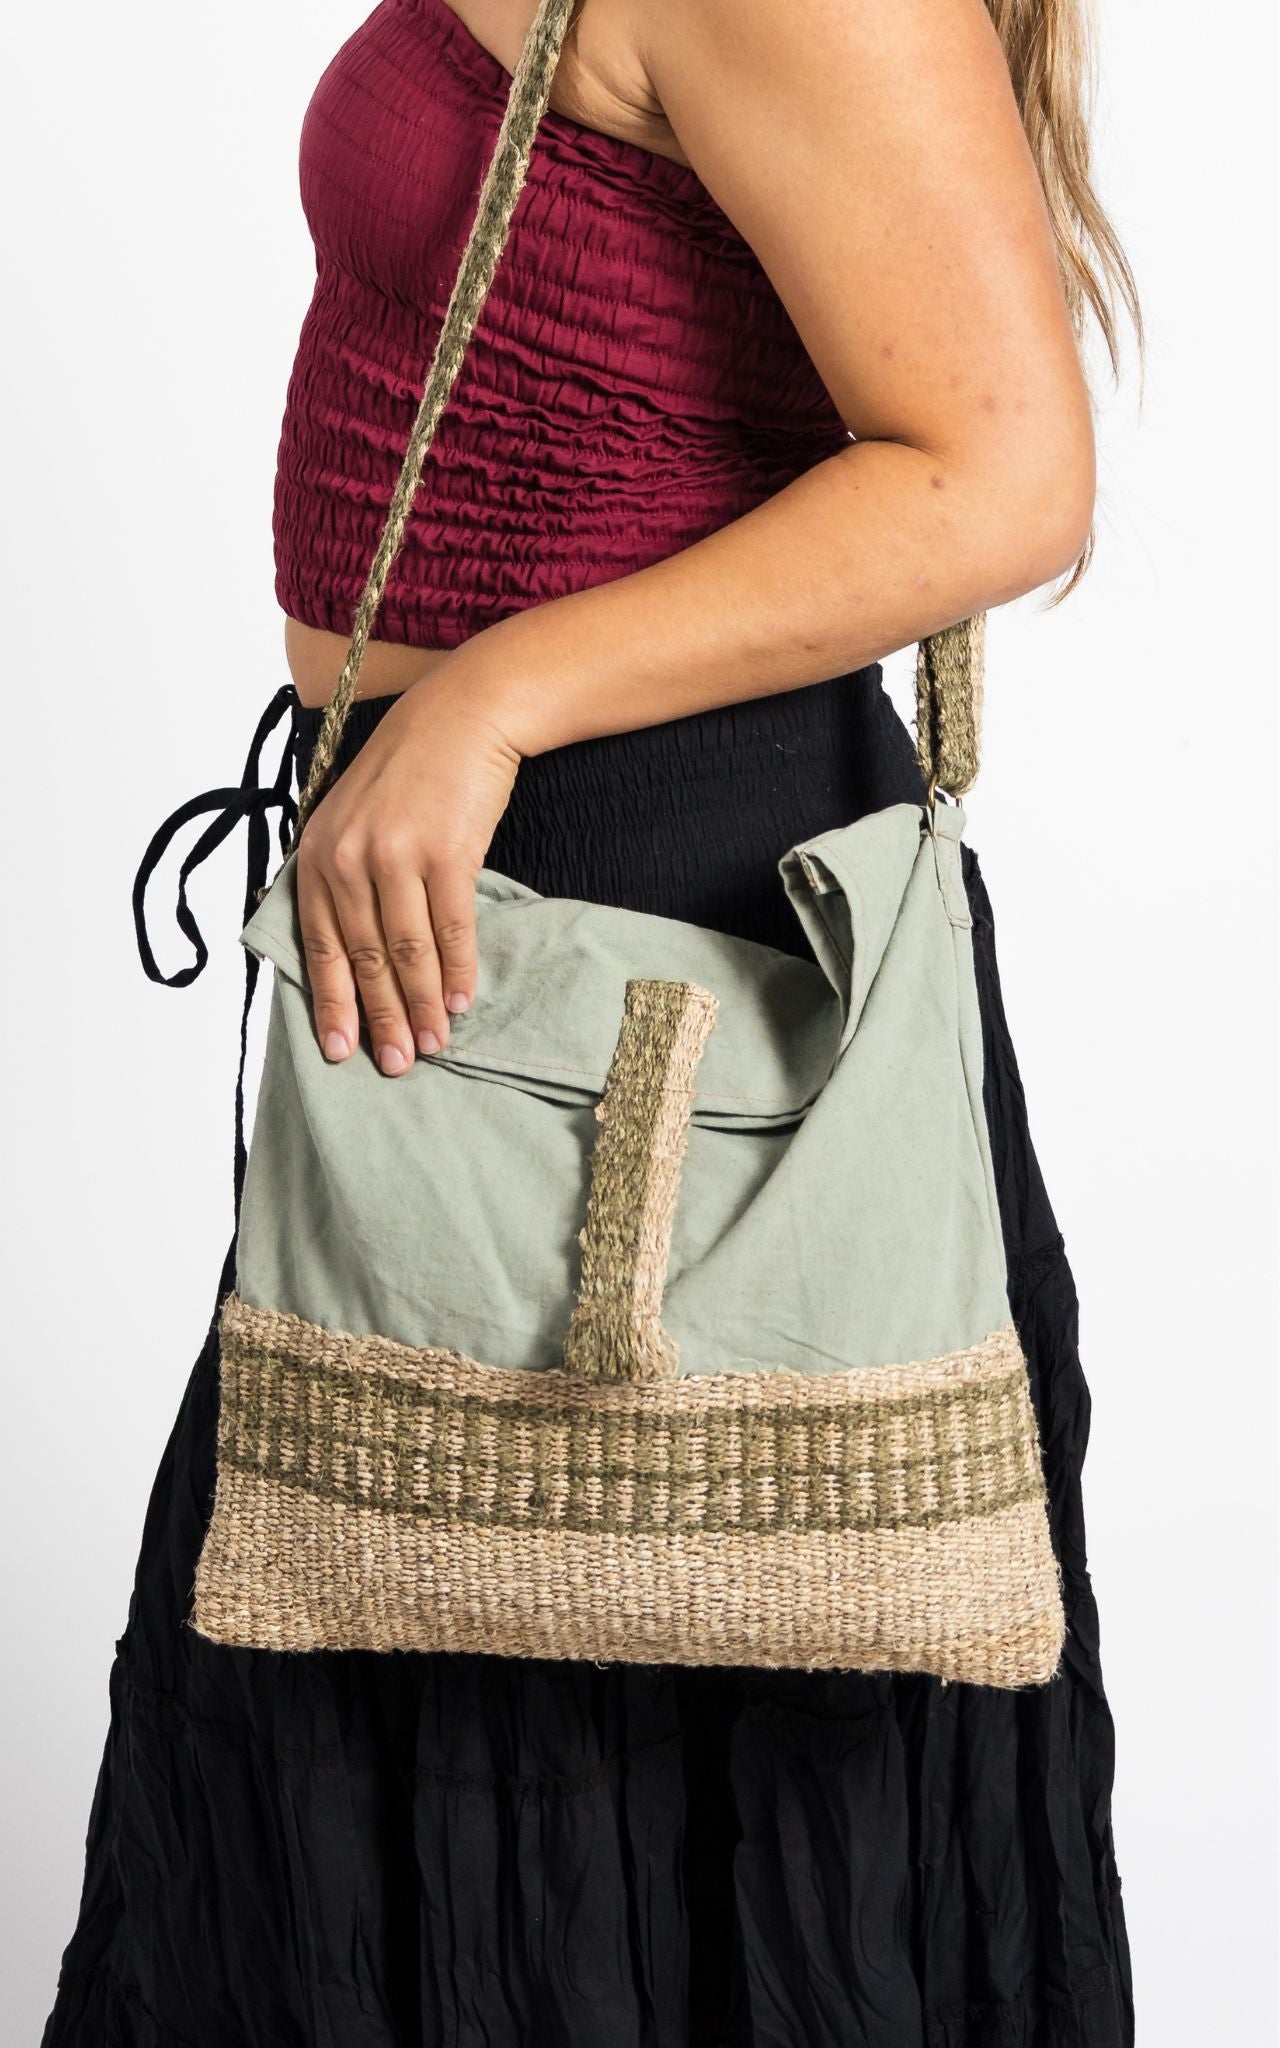 Surya Australia Handmade Hemp Satchel Bags made in Nepal - Pomegranate Skin